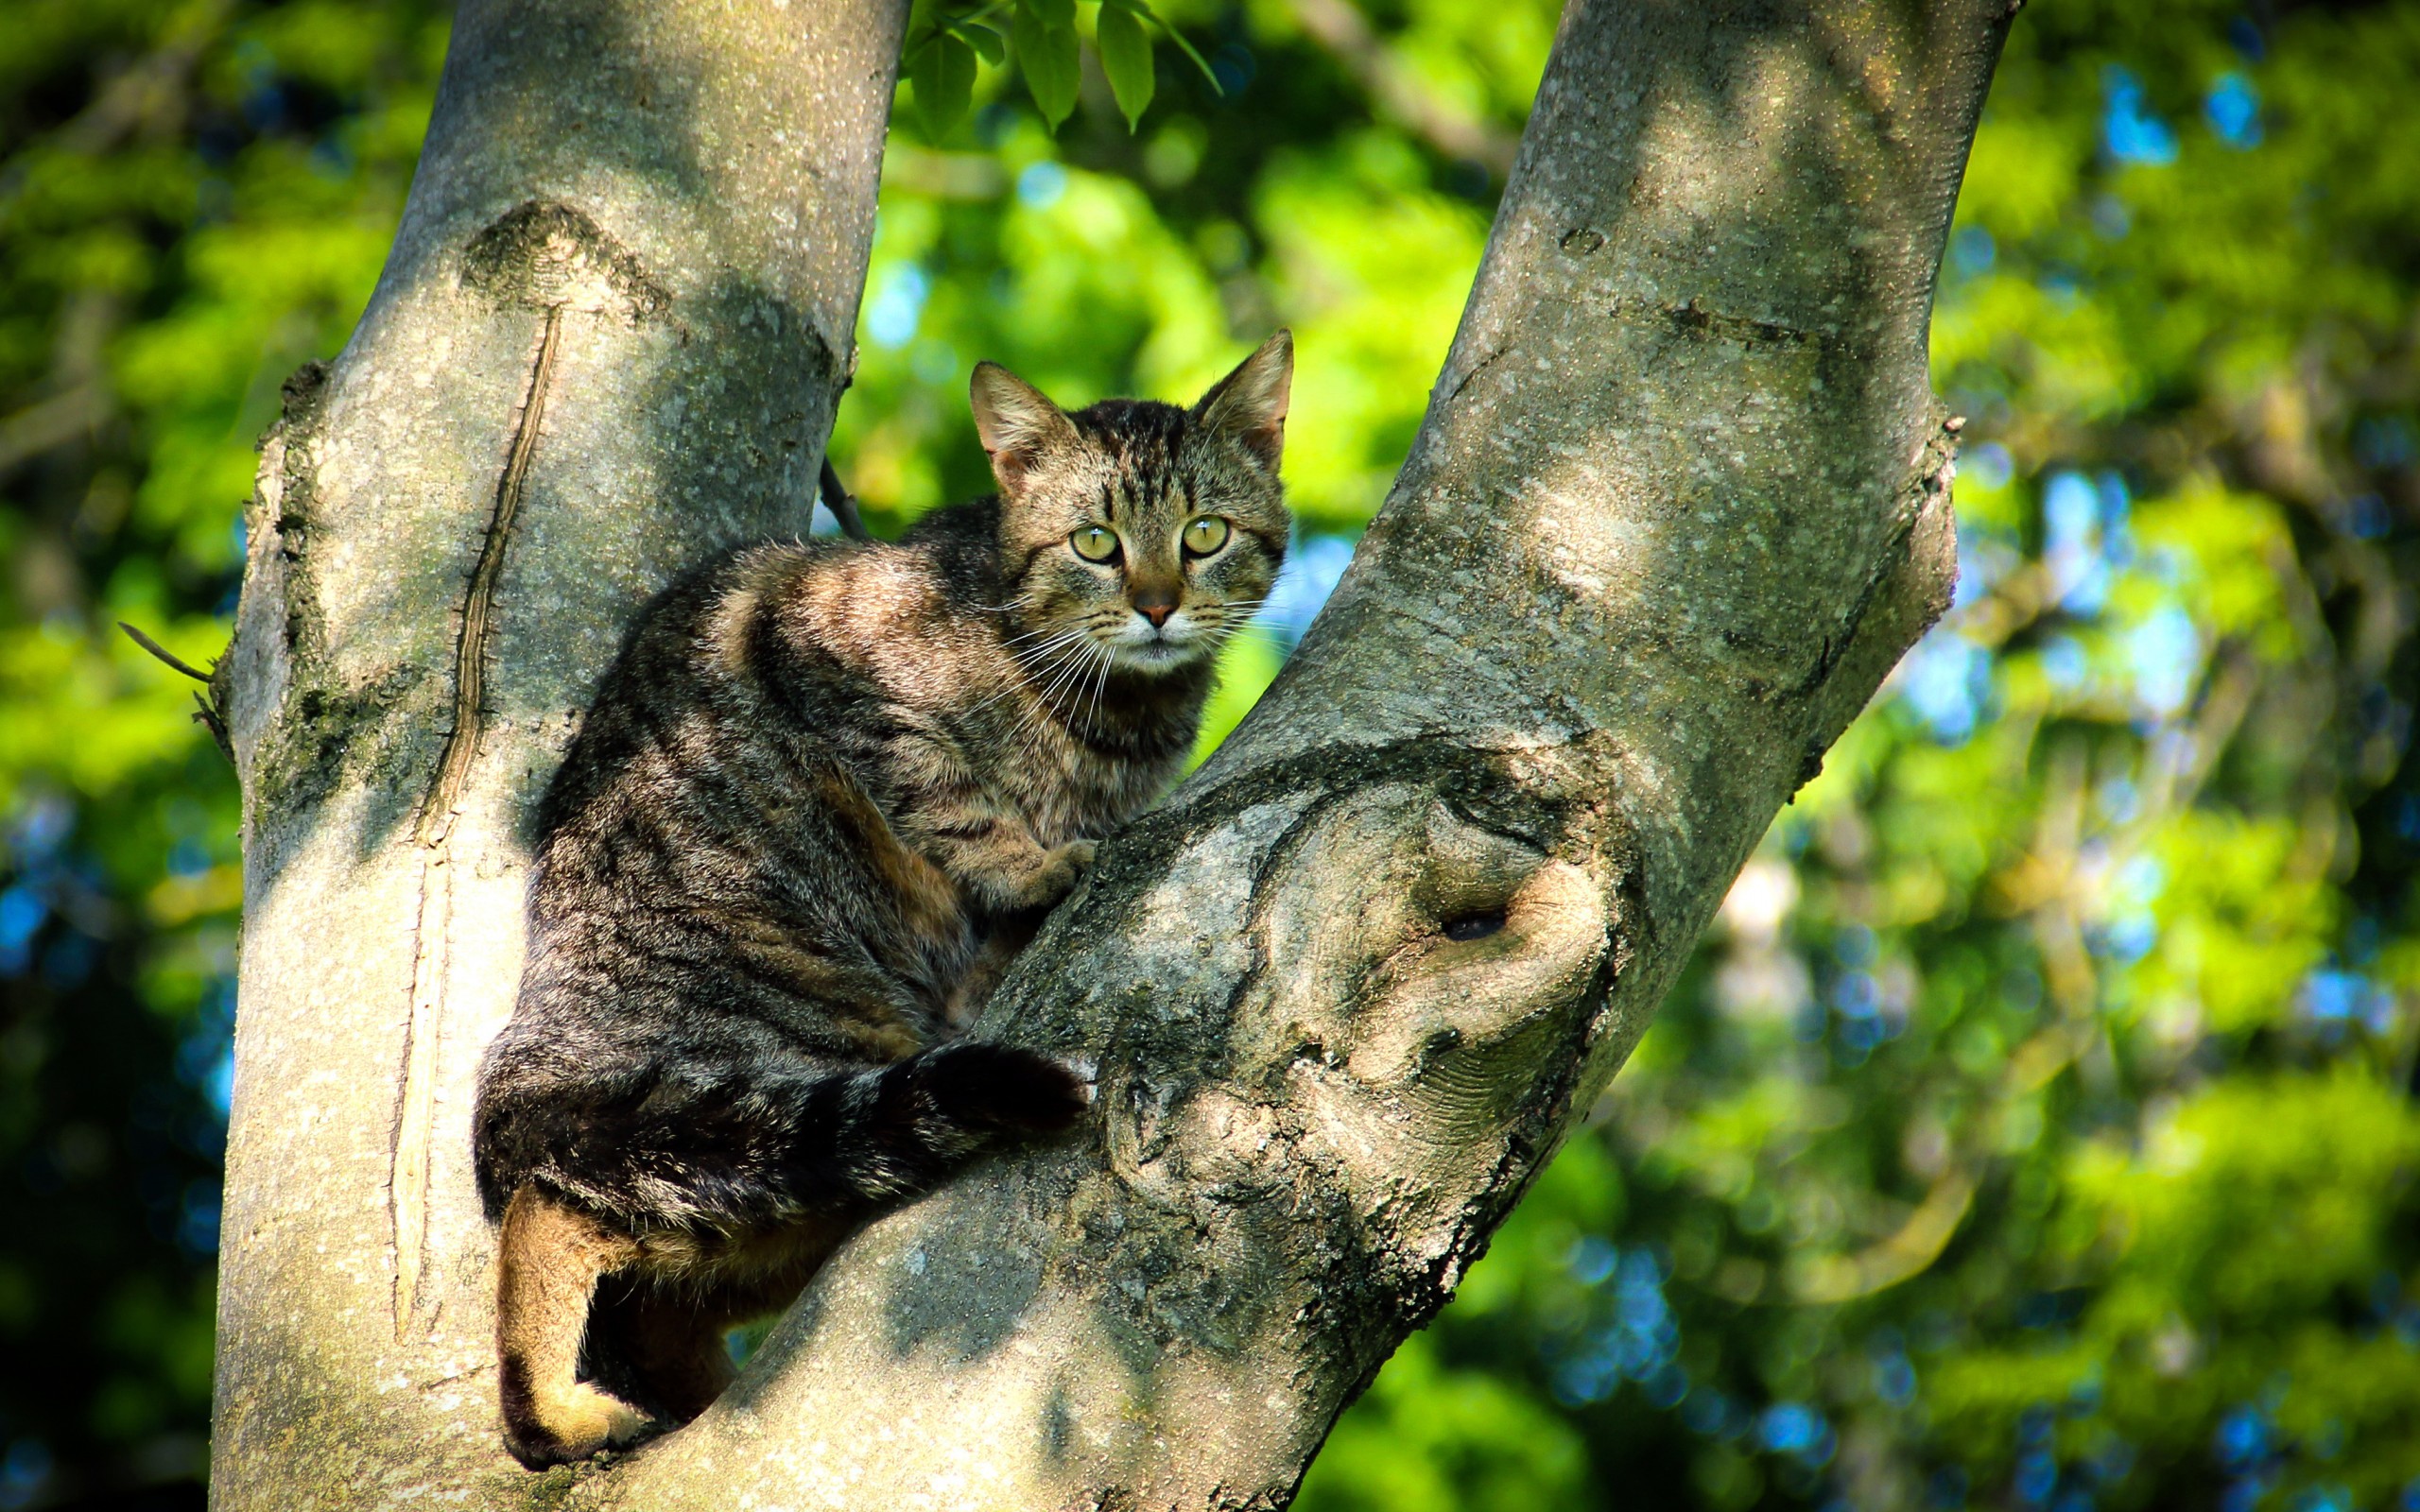 General 2560x1600 animals cats trees outdoors closeup